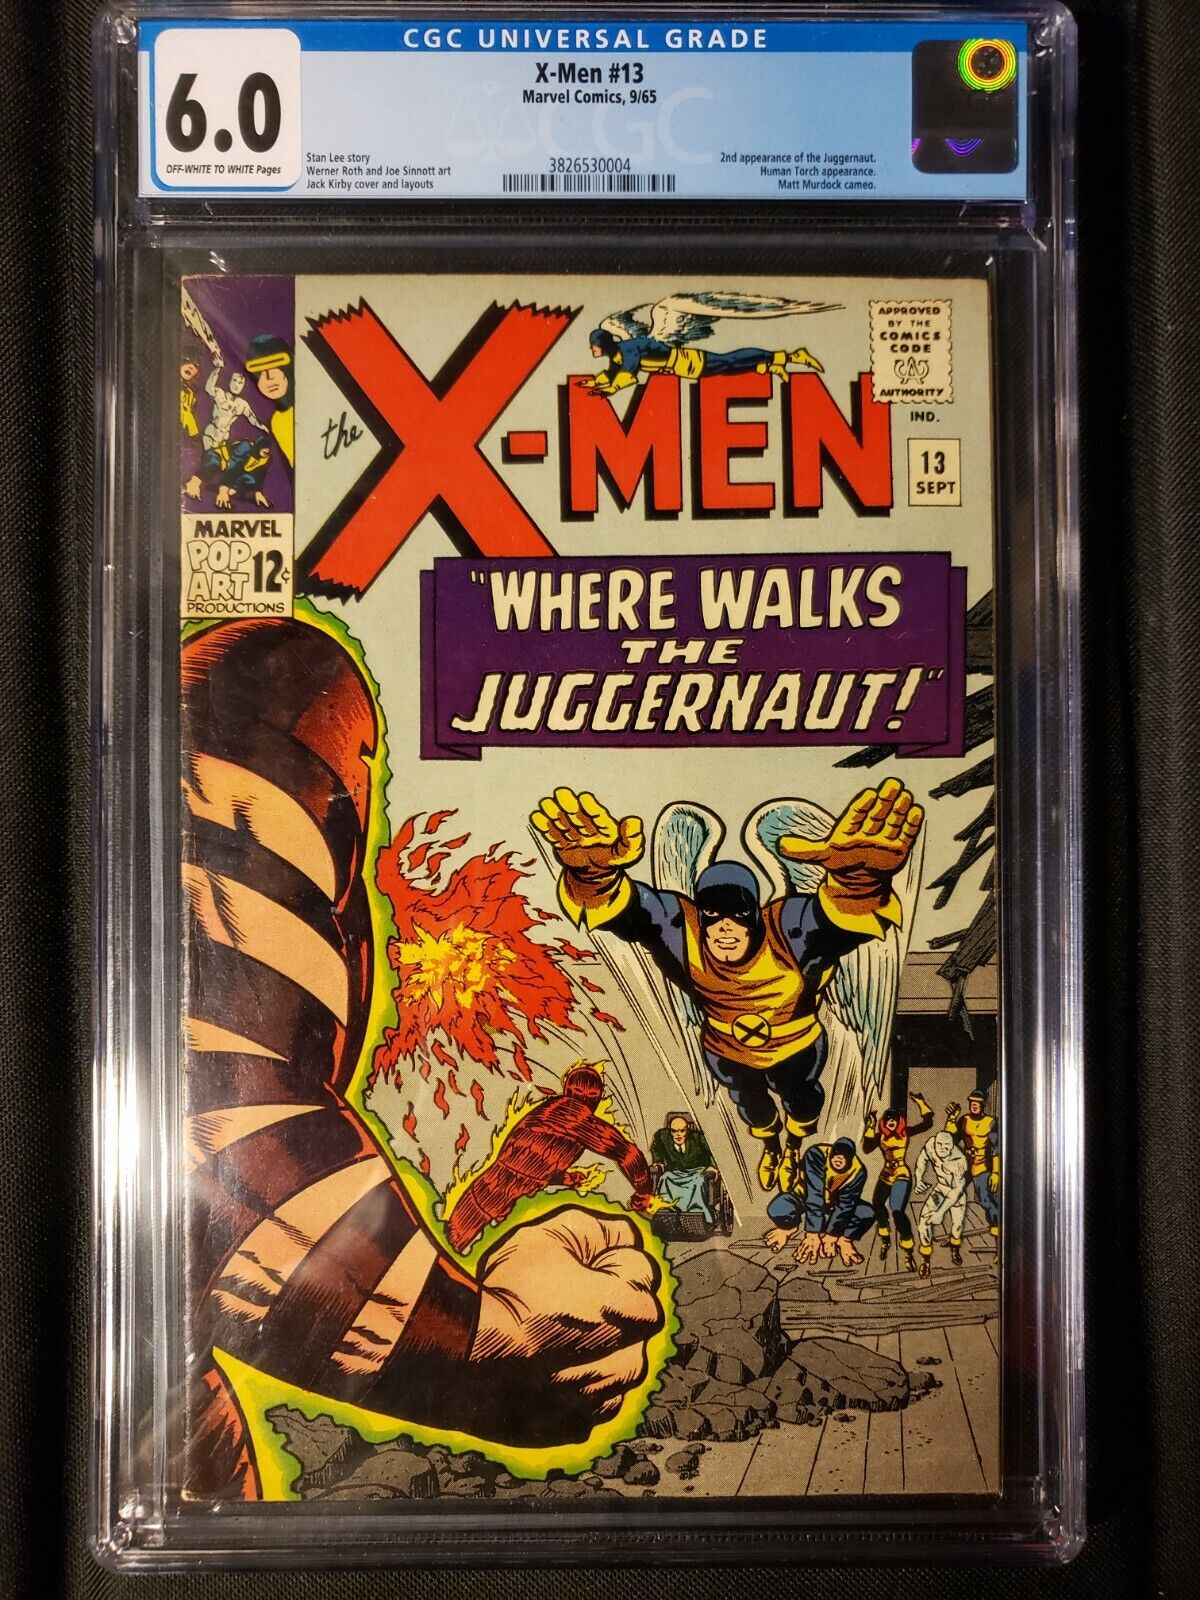 X-Men #13 (1965) 6.0 CGC, 2nd app of the Juggernaut, Human Torch appearance